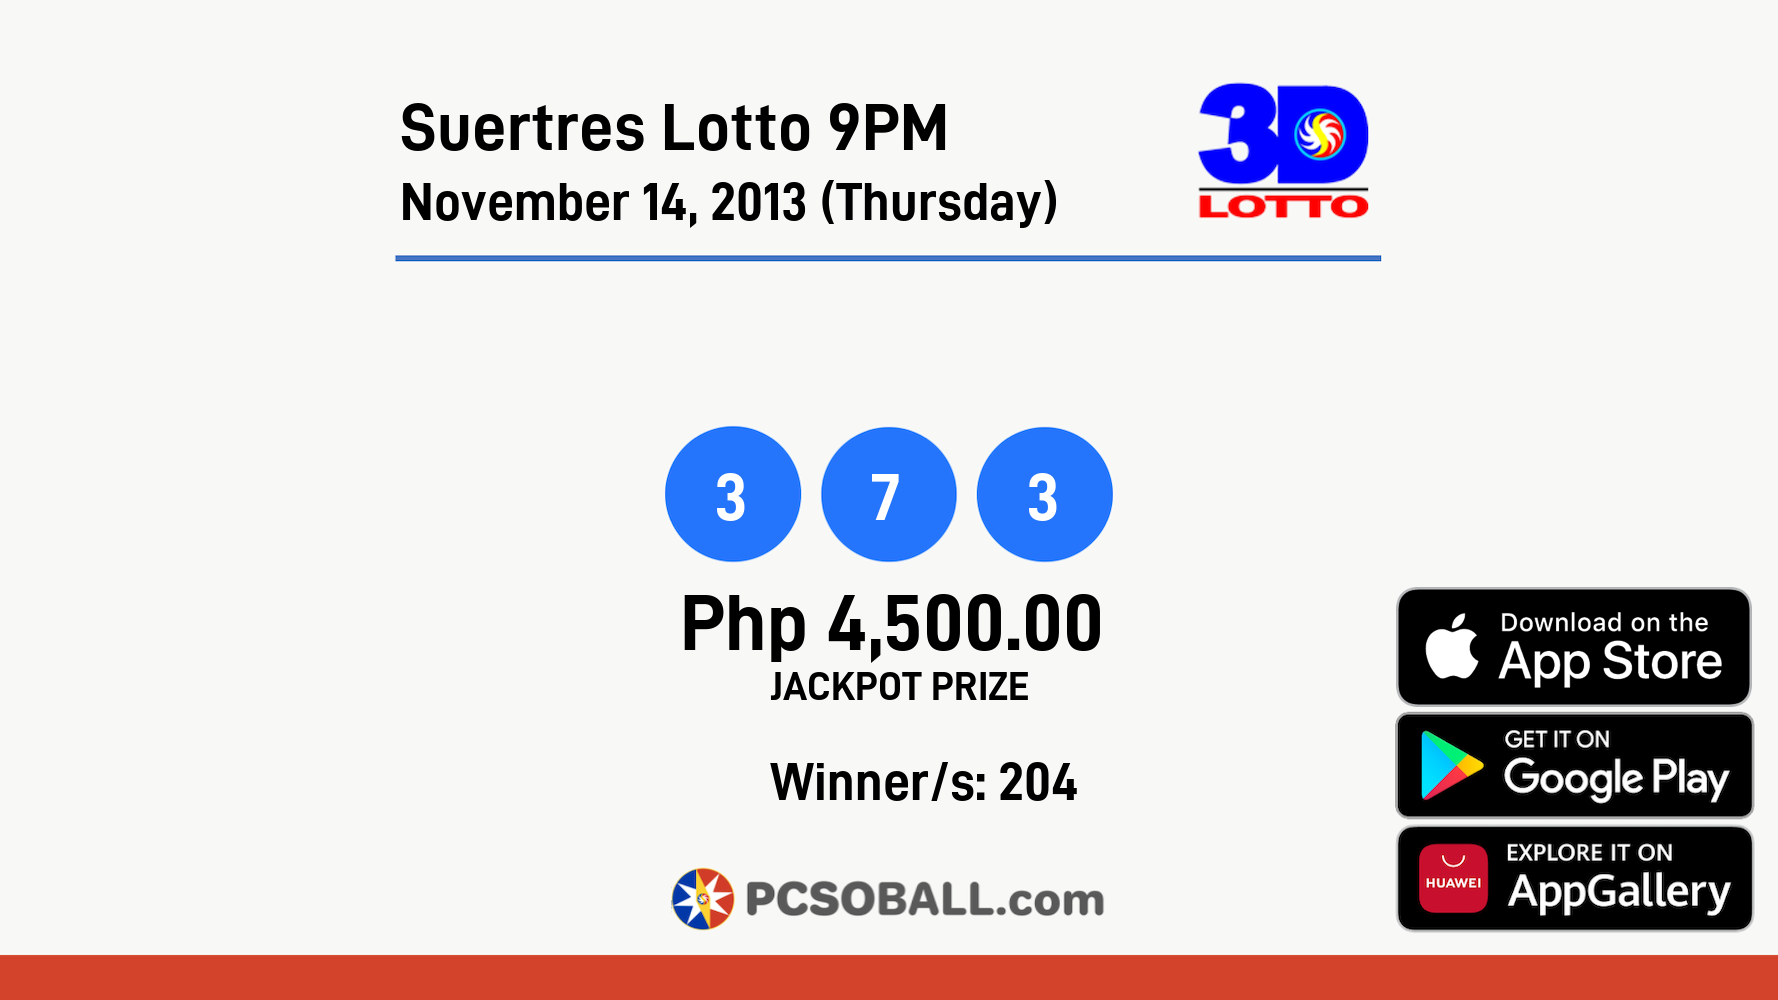 Suertres Lotto 9PM November 14, 2013 (Thursday) Result